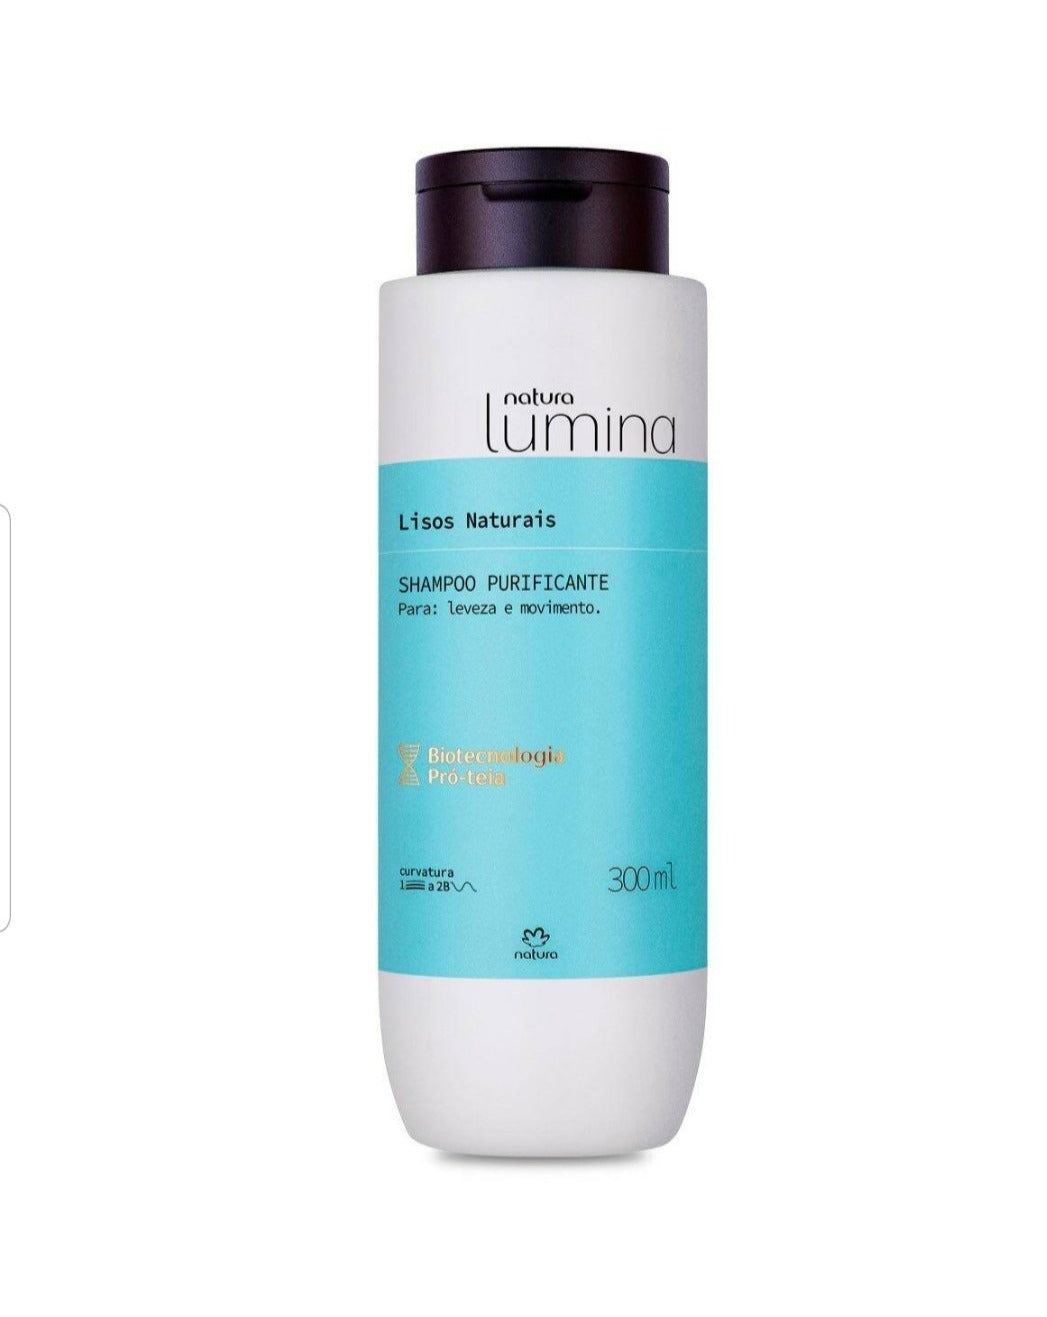 Lumina Straight Hair Shampoo 300ml - Natura 